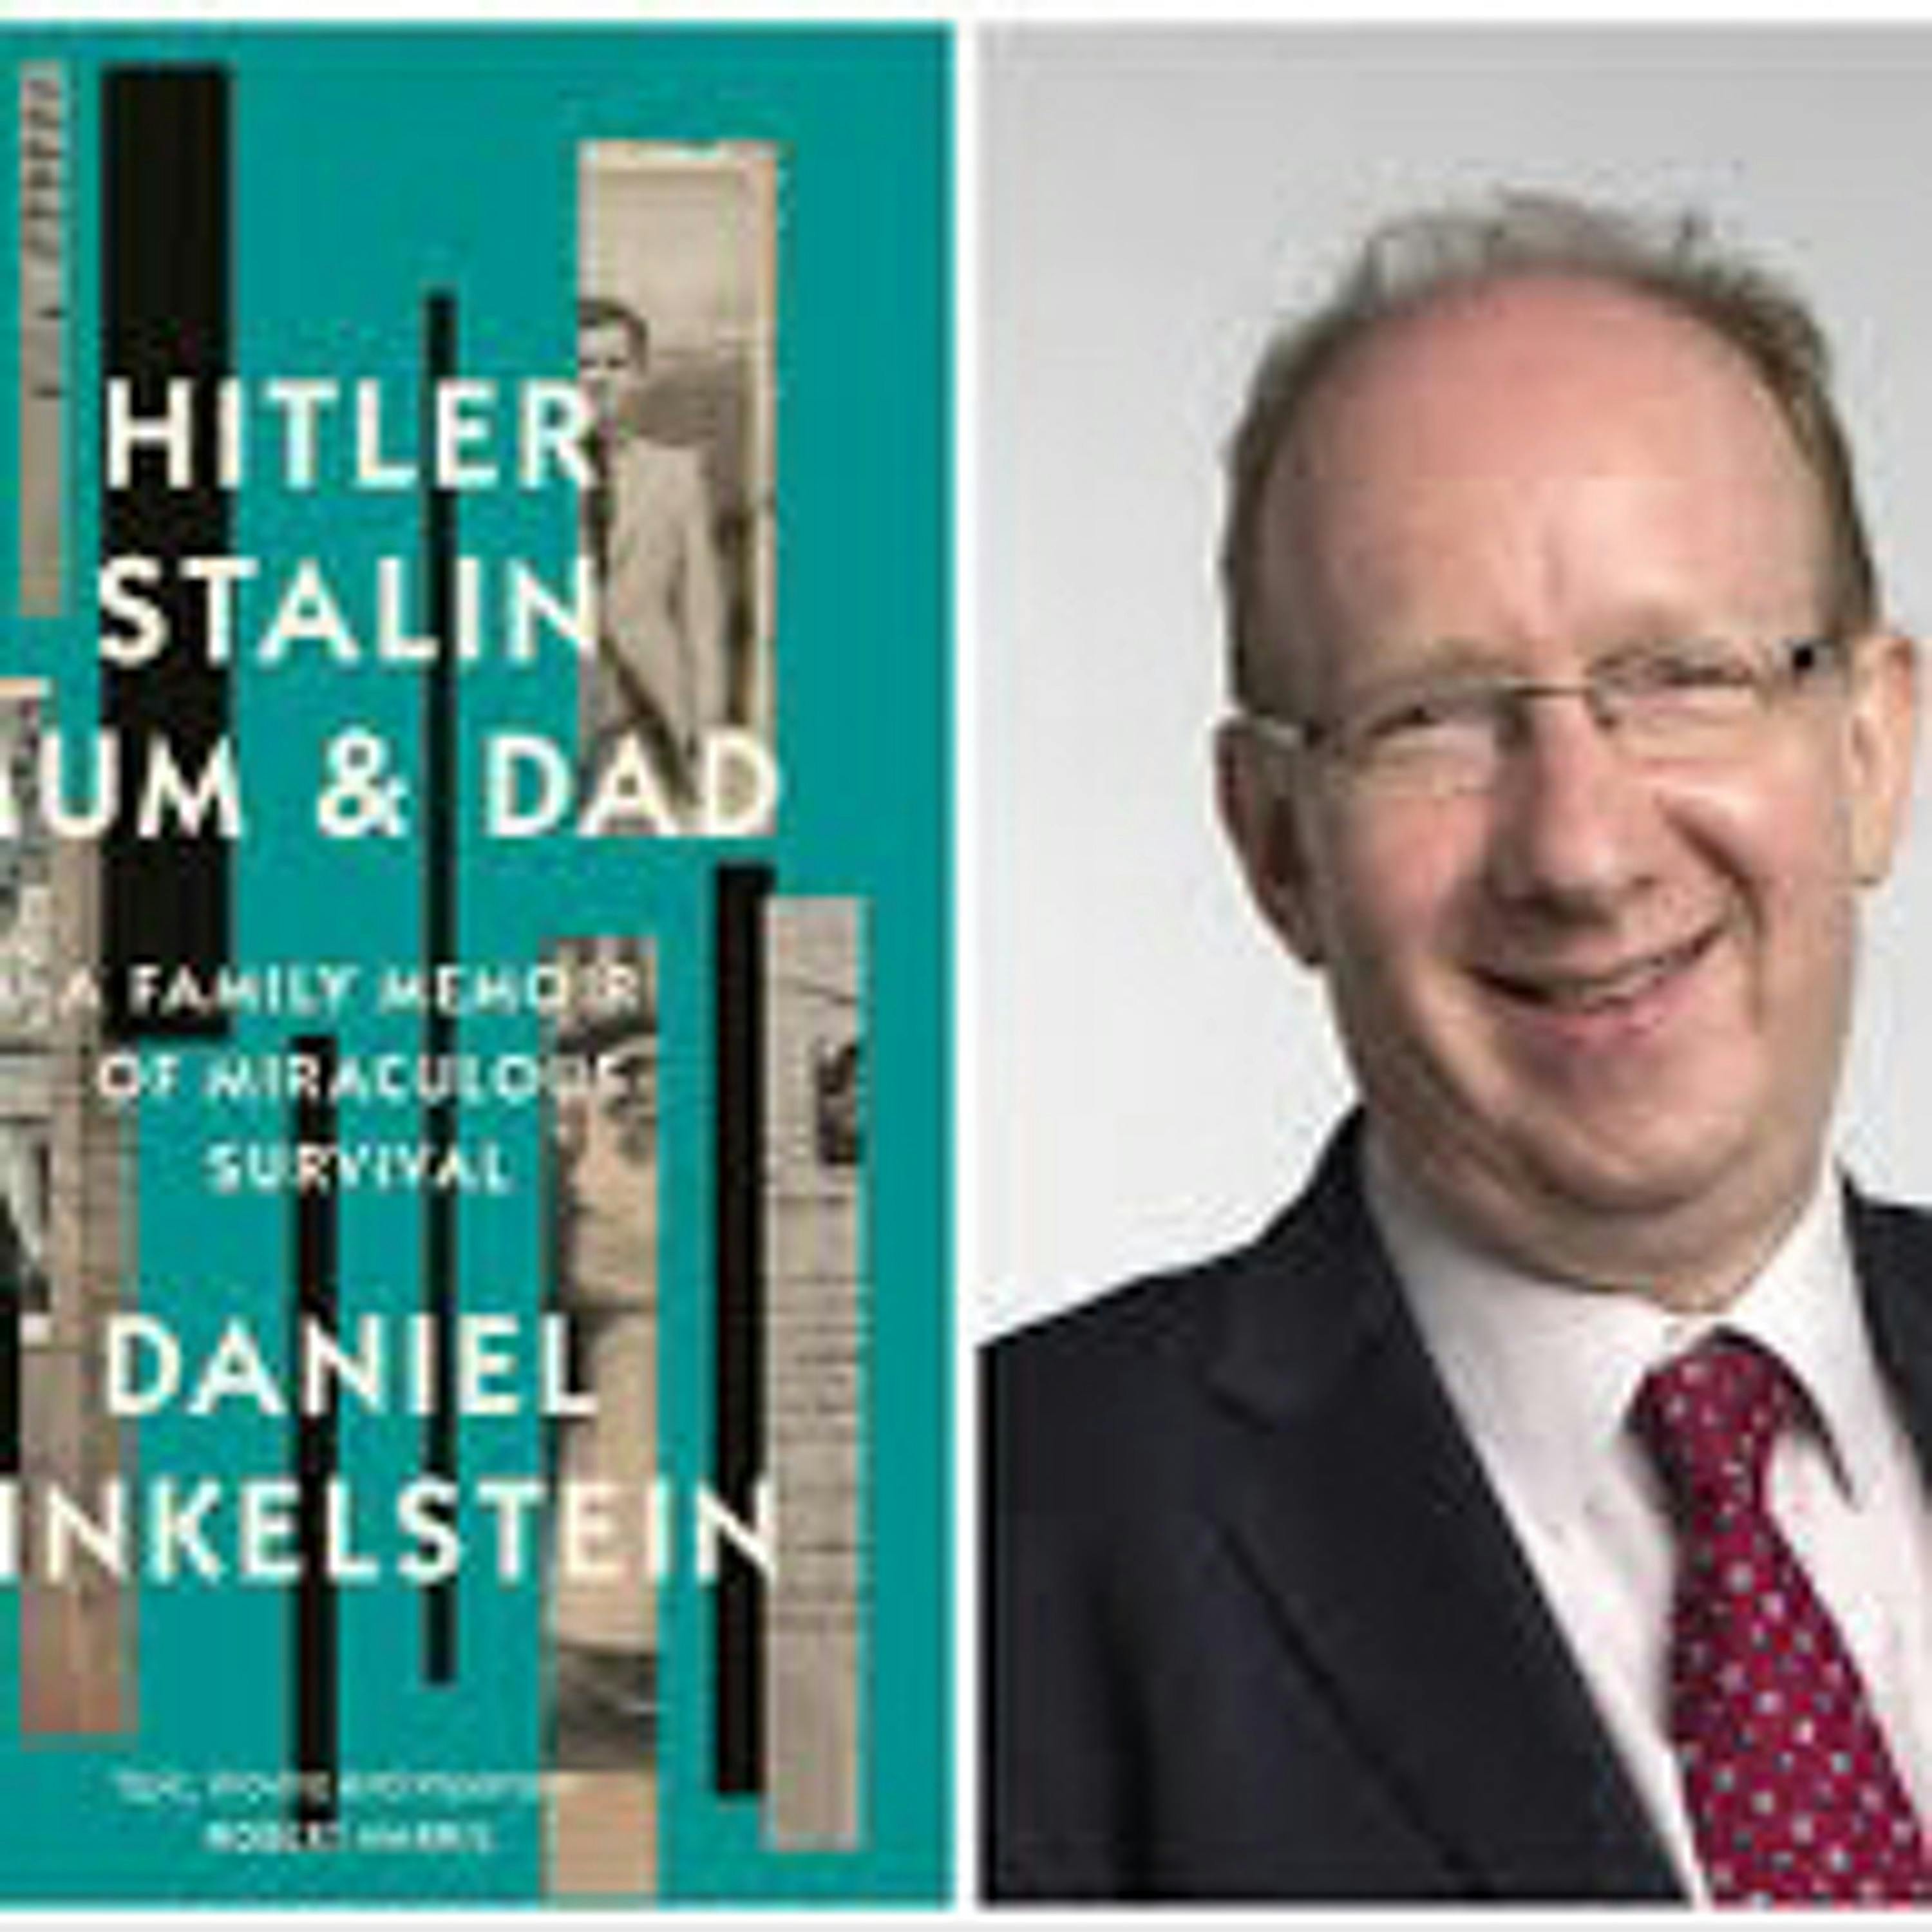 115: Lord Daniel Finkelstein: Hitler, Stalin, Mum and Dad: A Family Memoir of Miraculous Survival